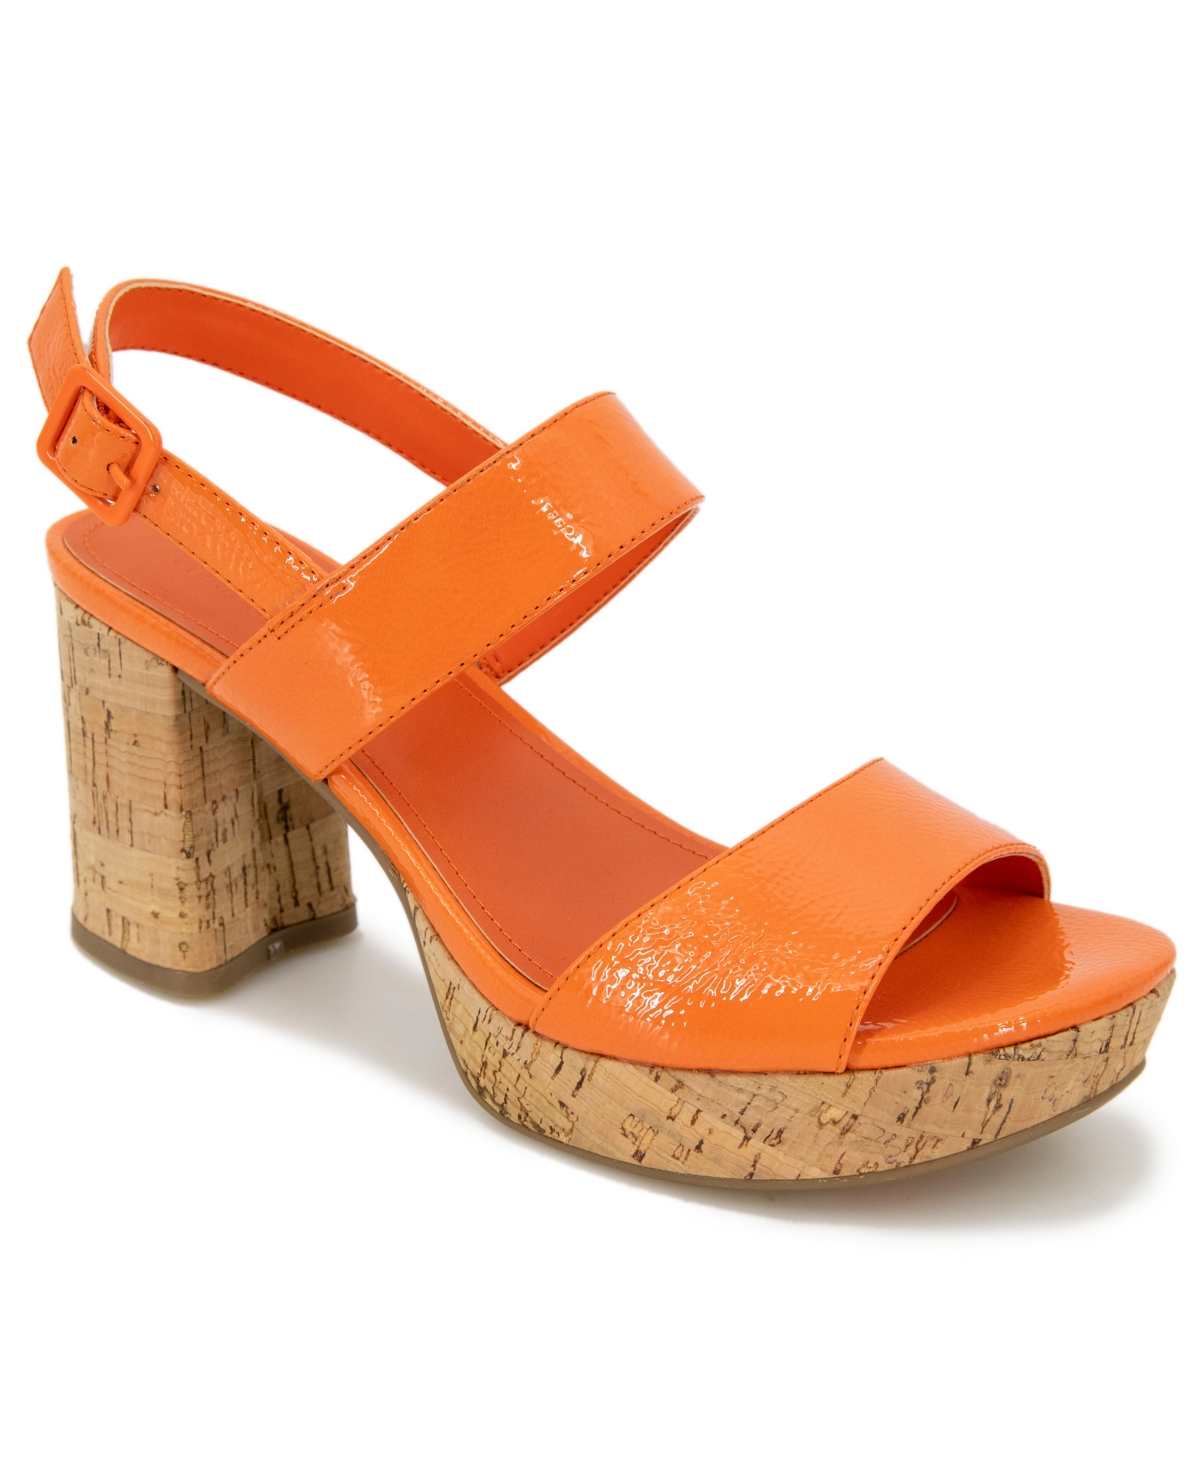 Women's Reebeka Platform Sandals - Orange Patent